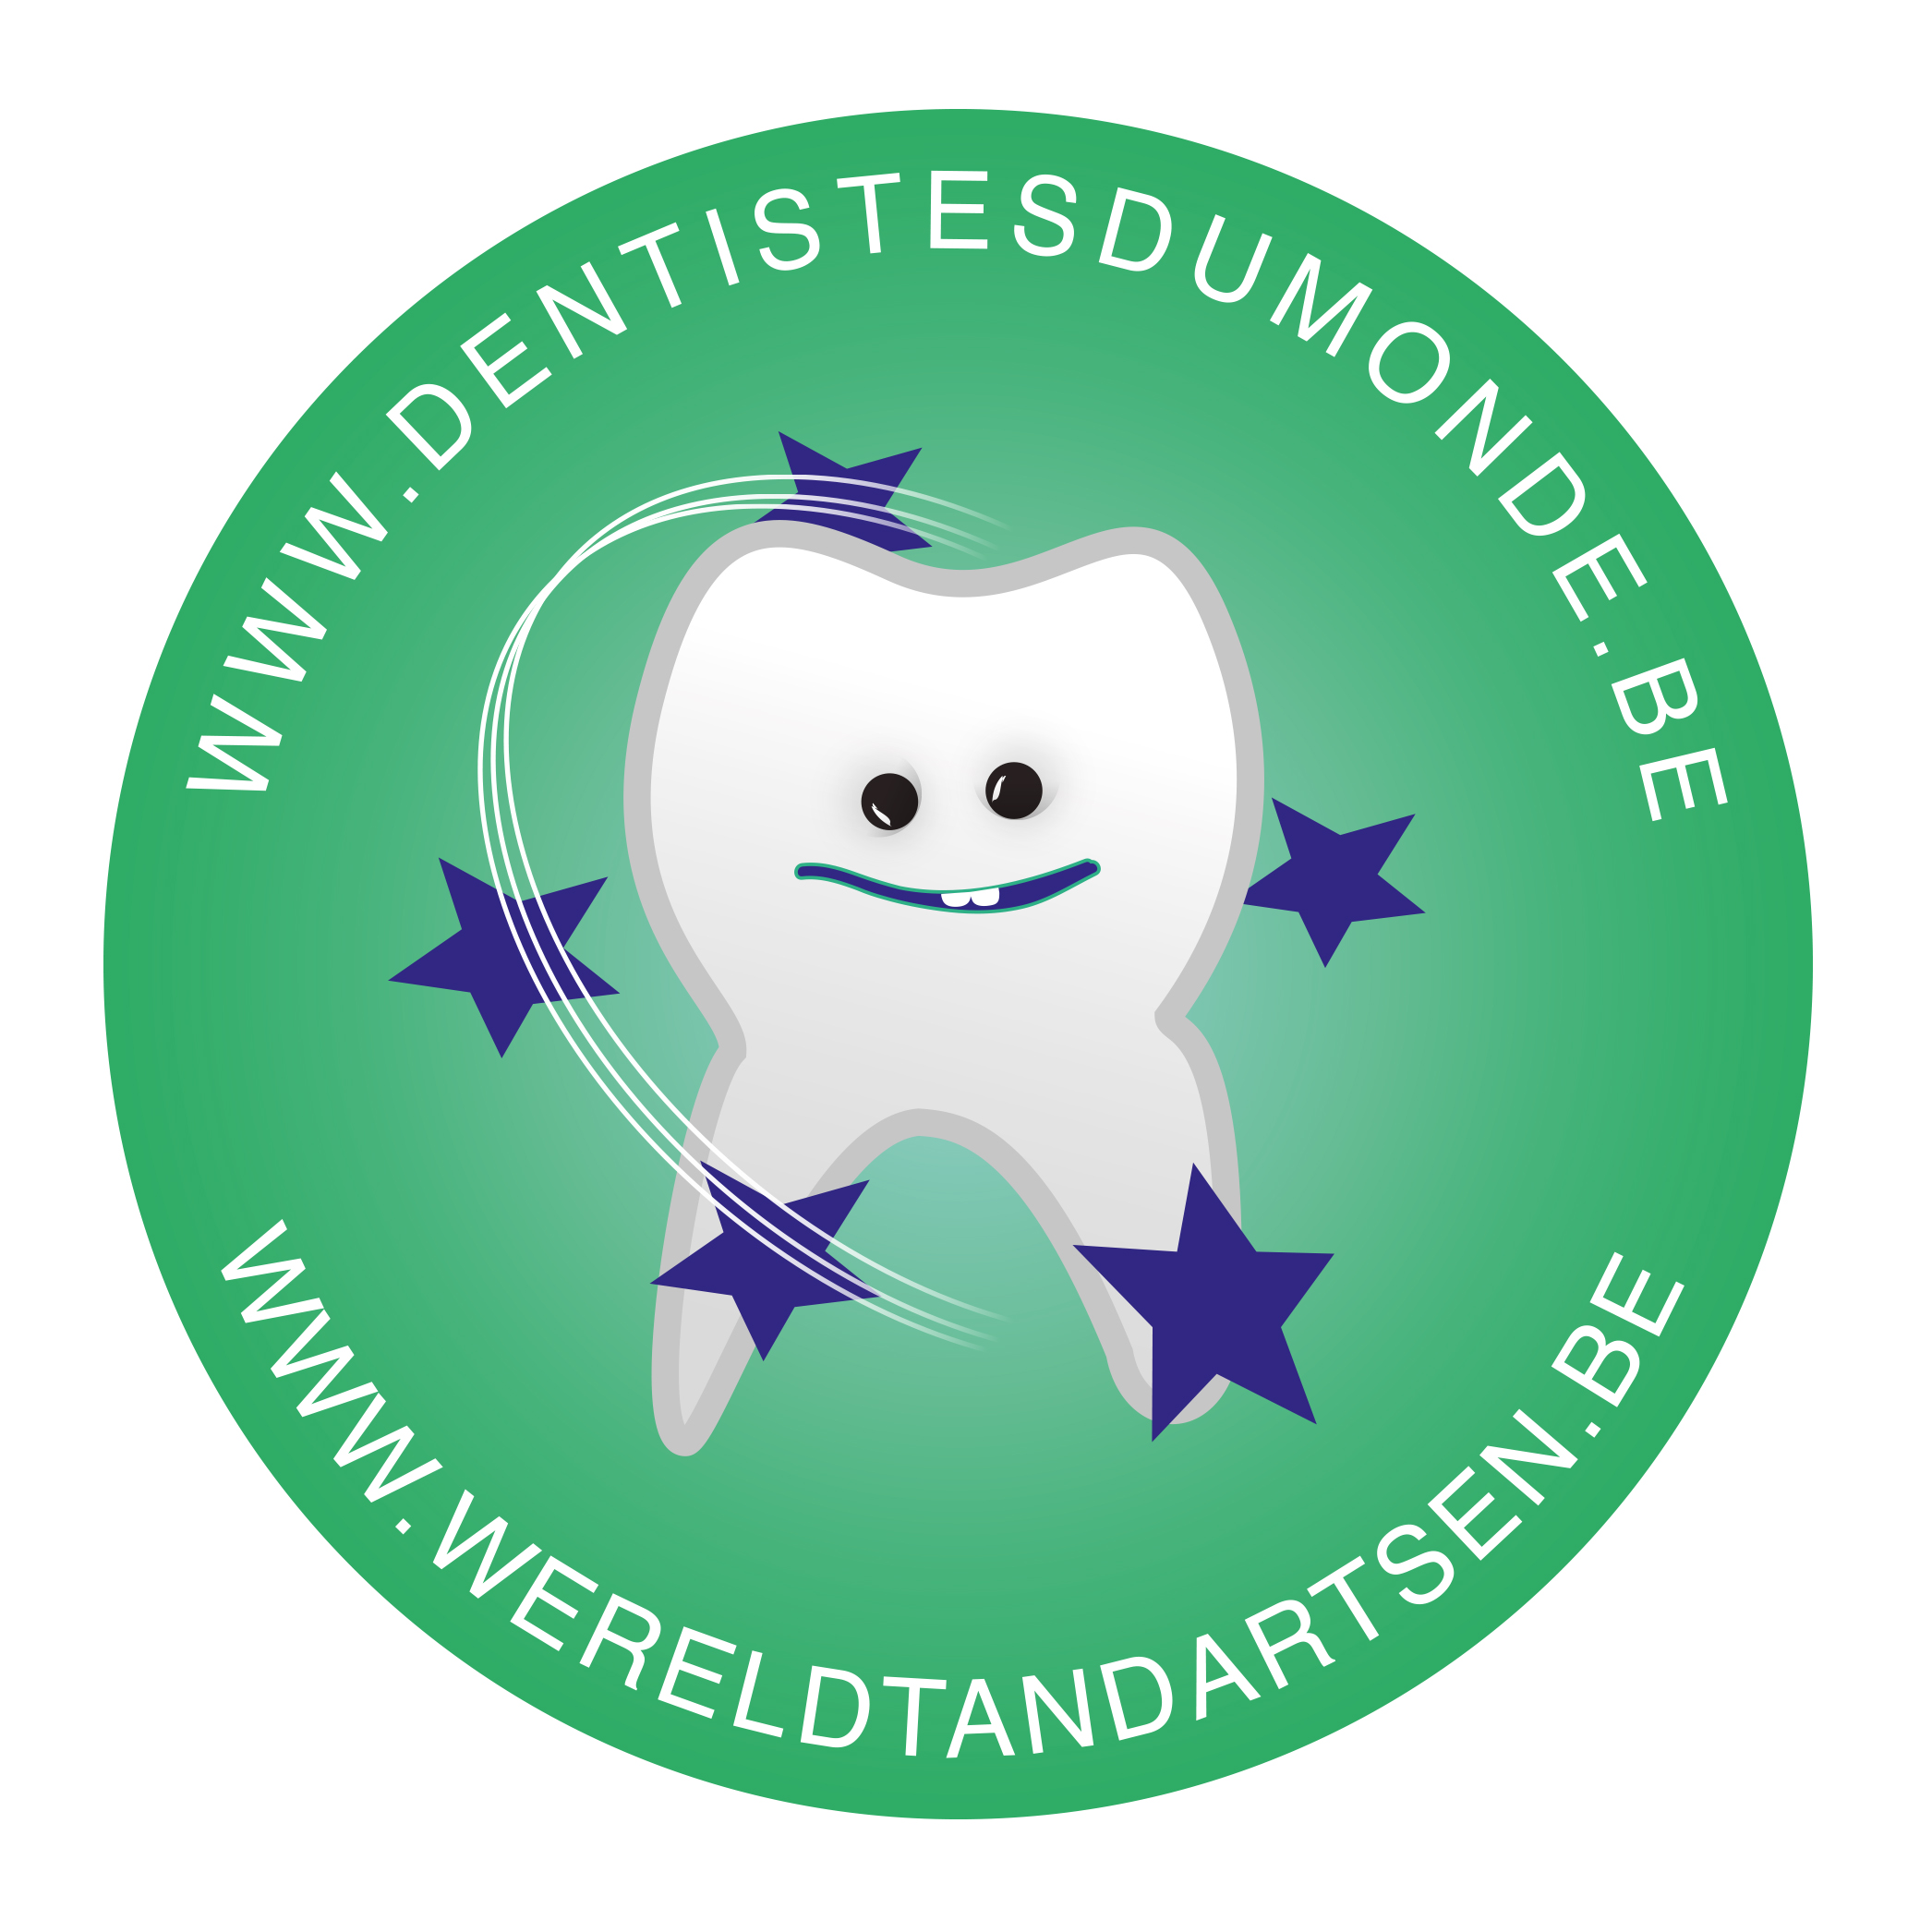 Wereld tandartsen logo